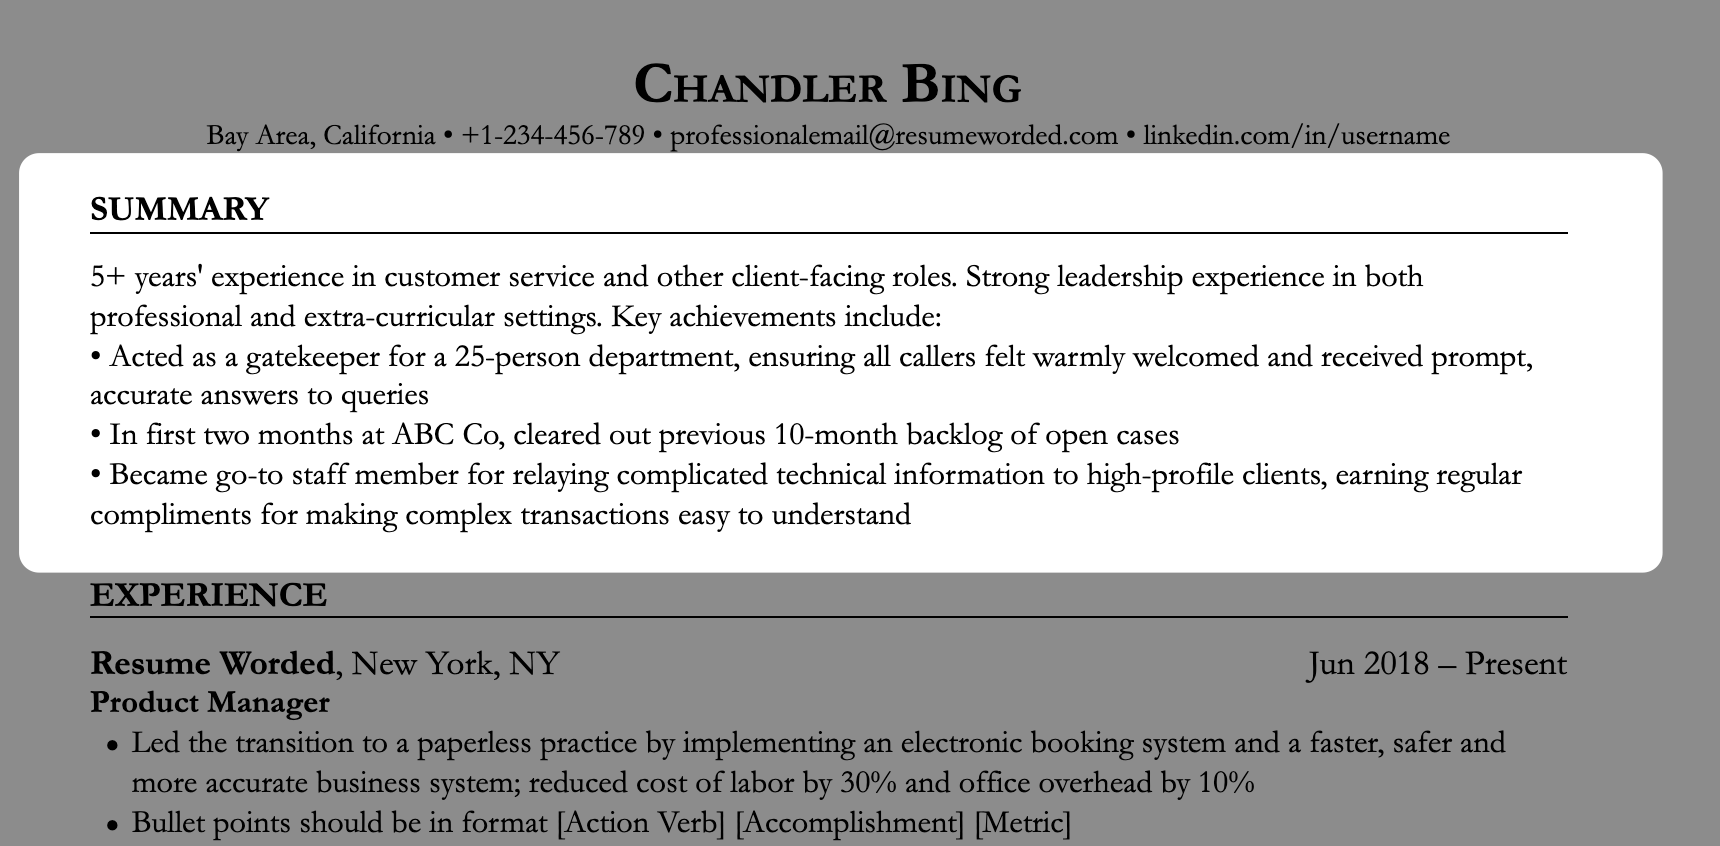 Resume summary example of mid-level customer service employee, highlighting strong accomplishments